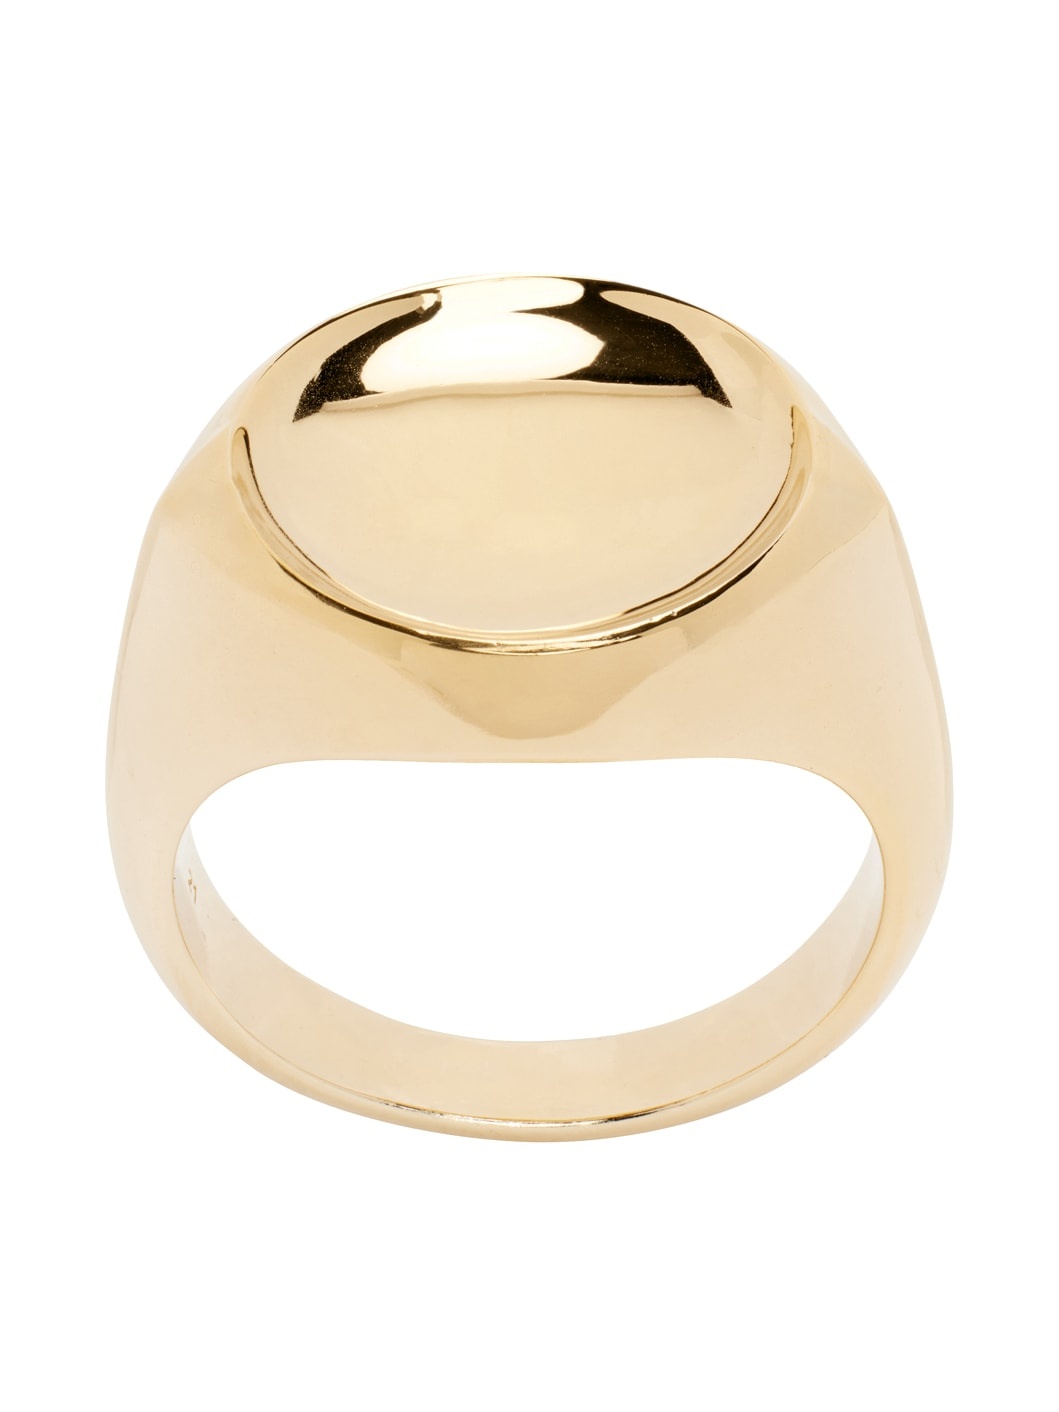 Gold Signet Ring - 1